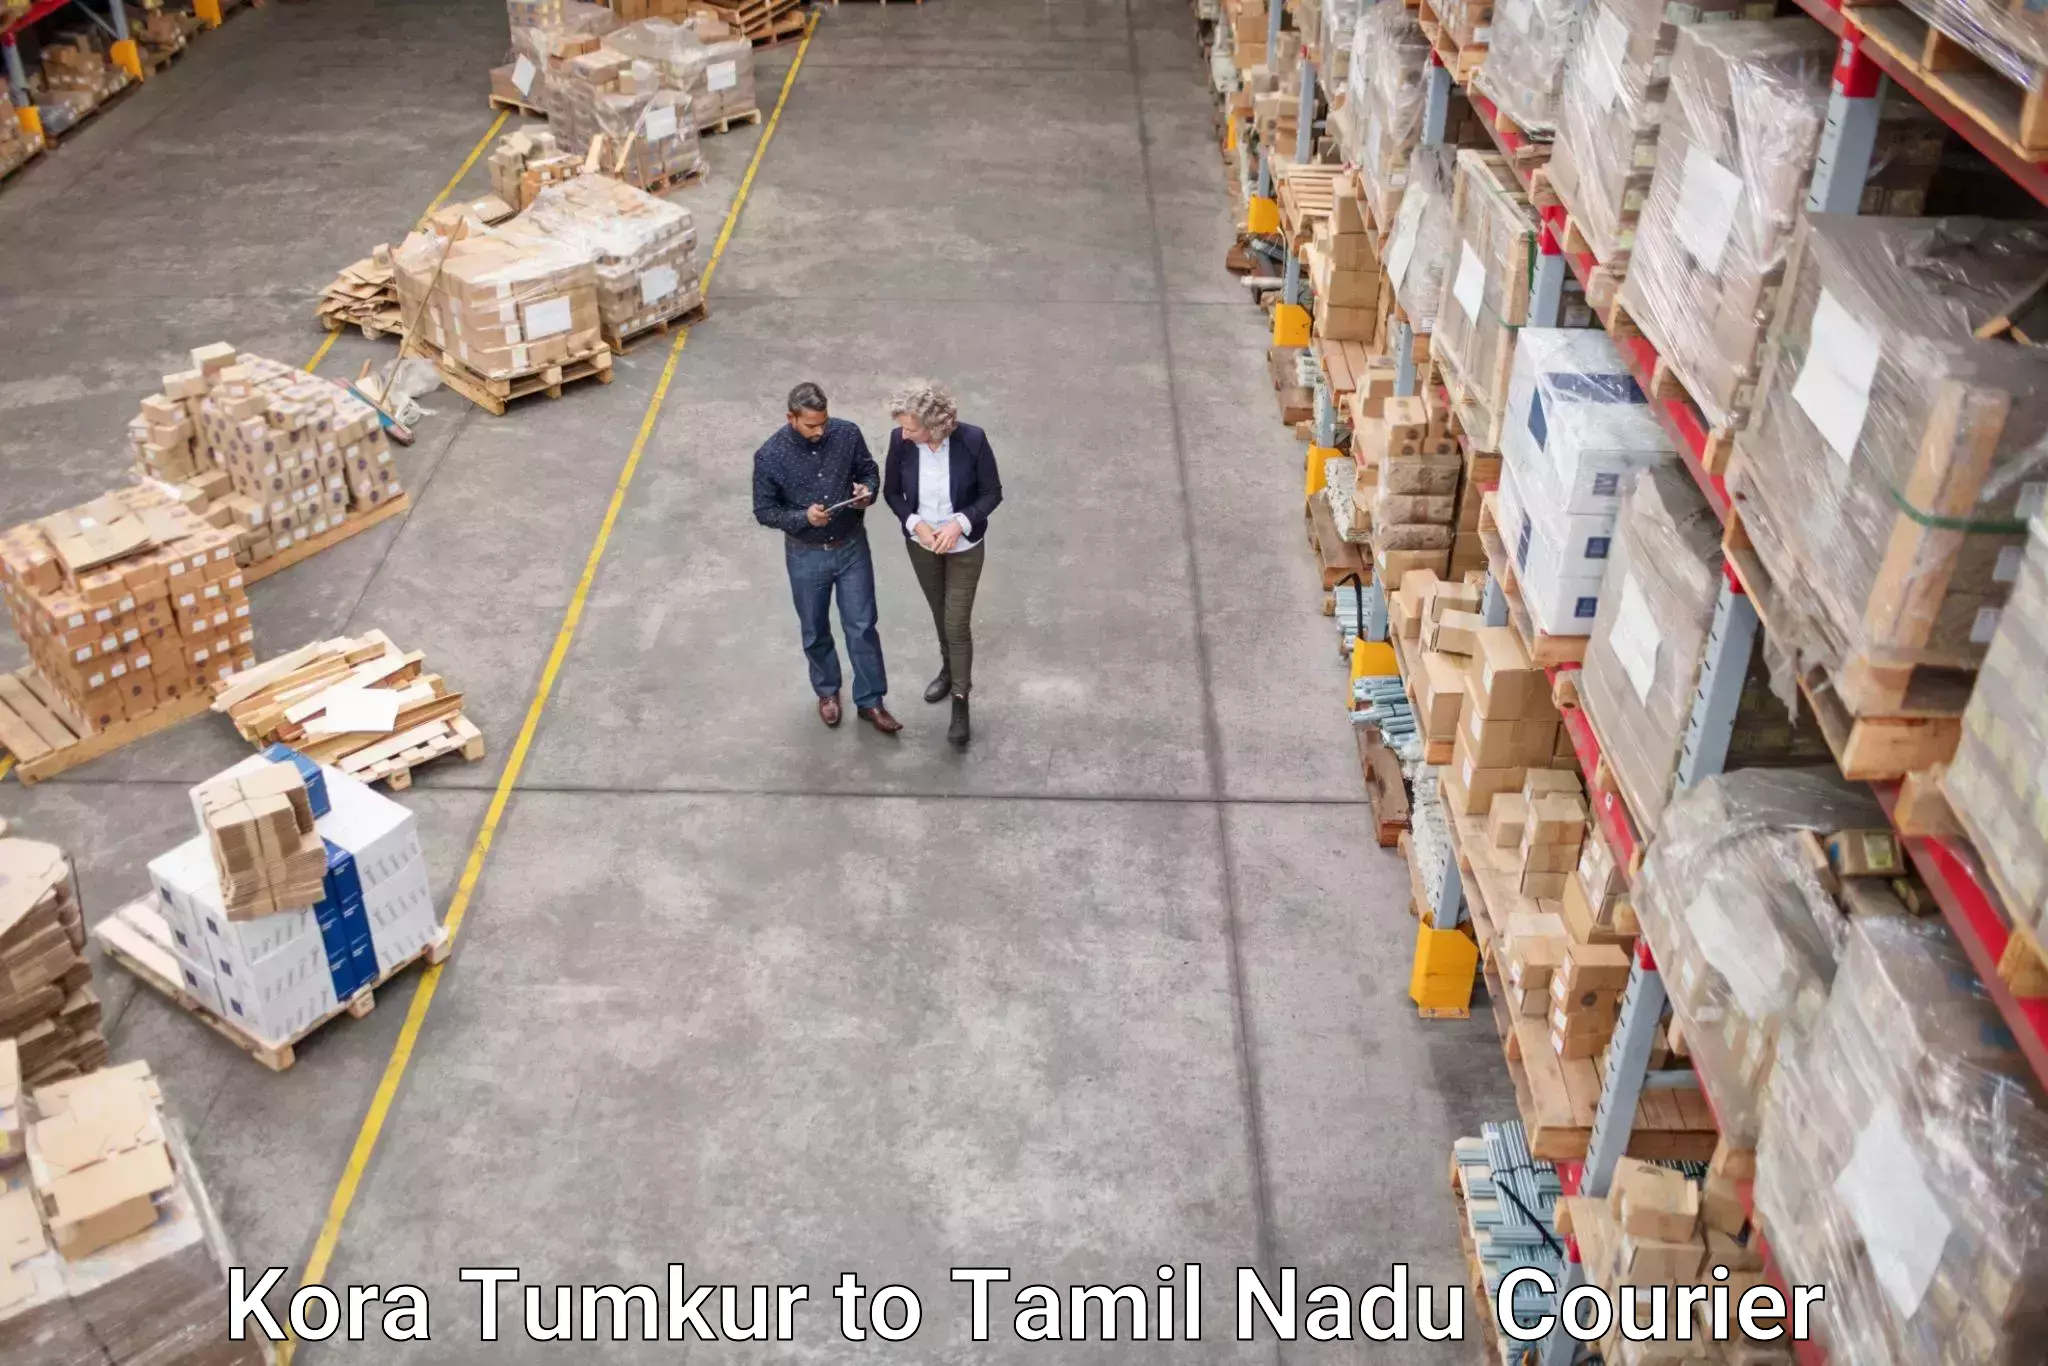 Dynamic courier operations Kora Tumkur to Vriddhachalam